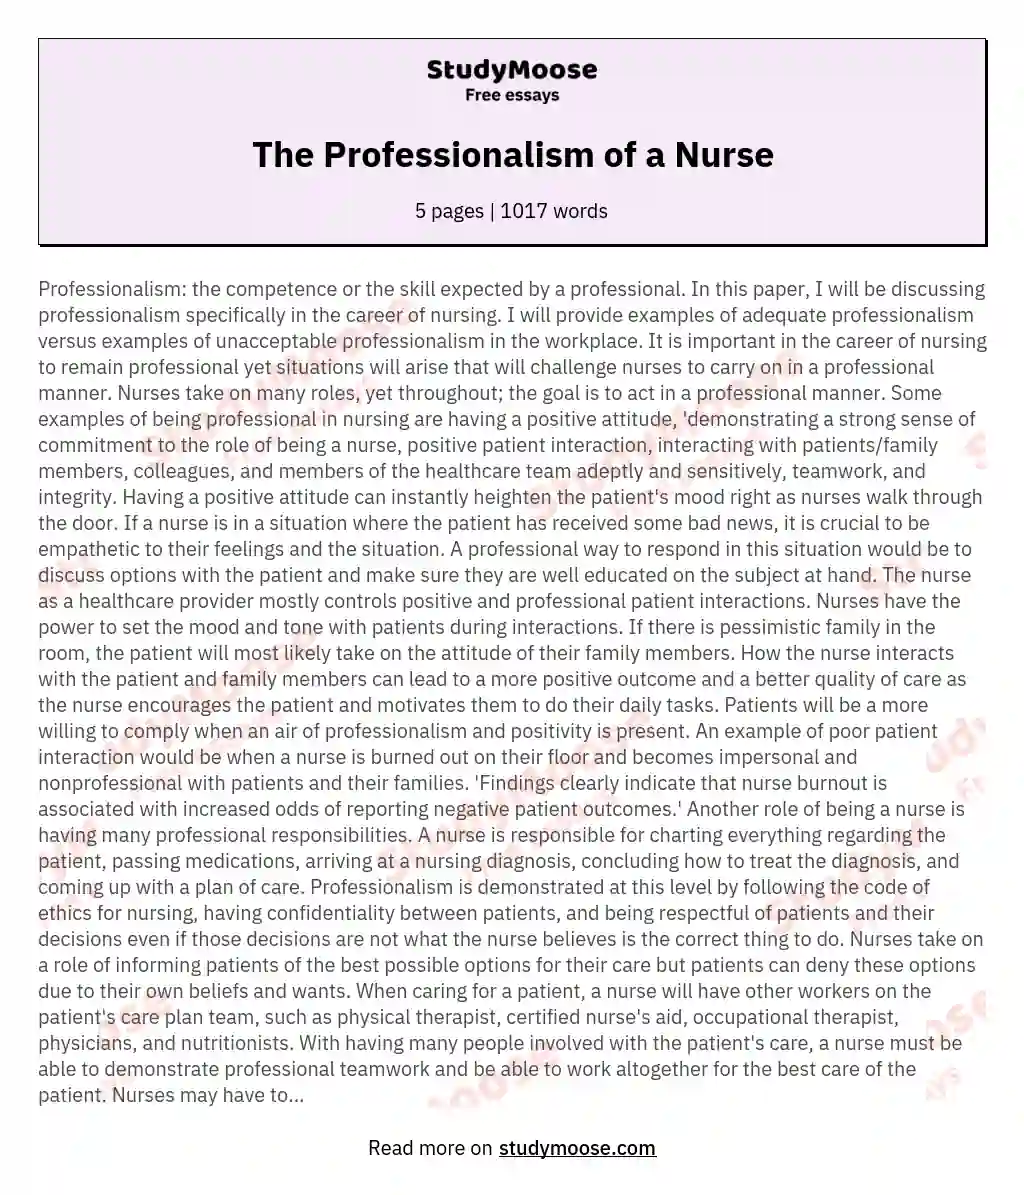 The Professionalism of a Nurse essay